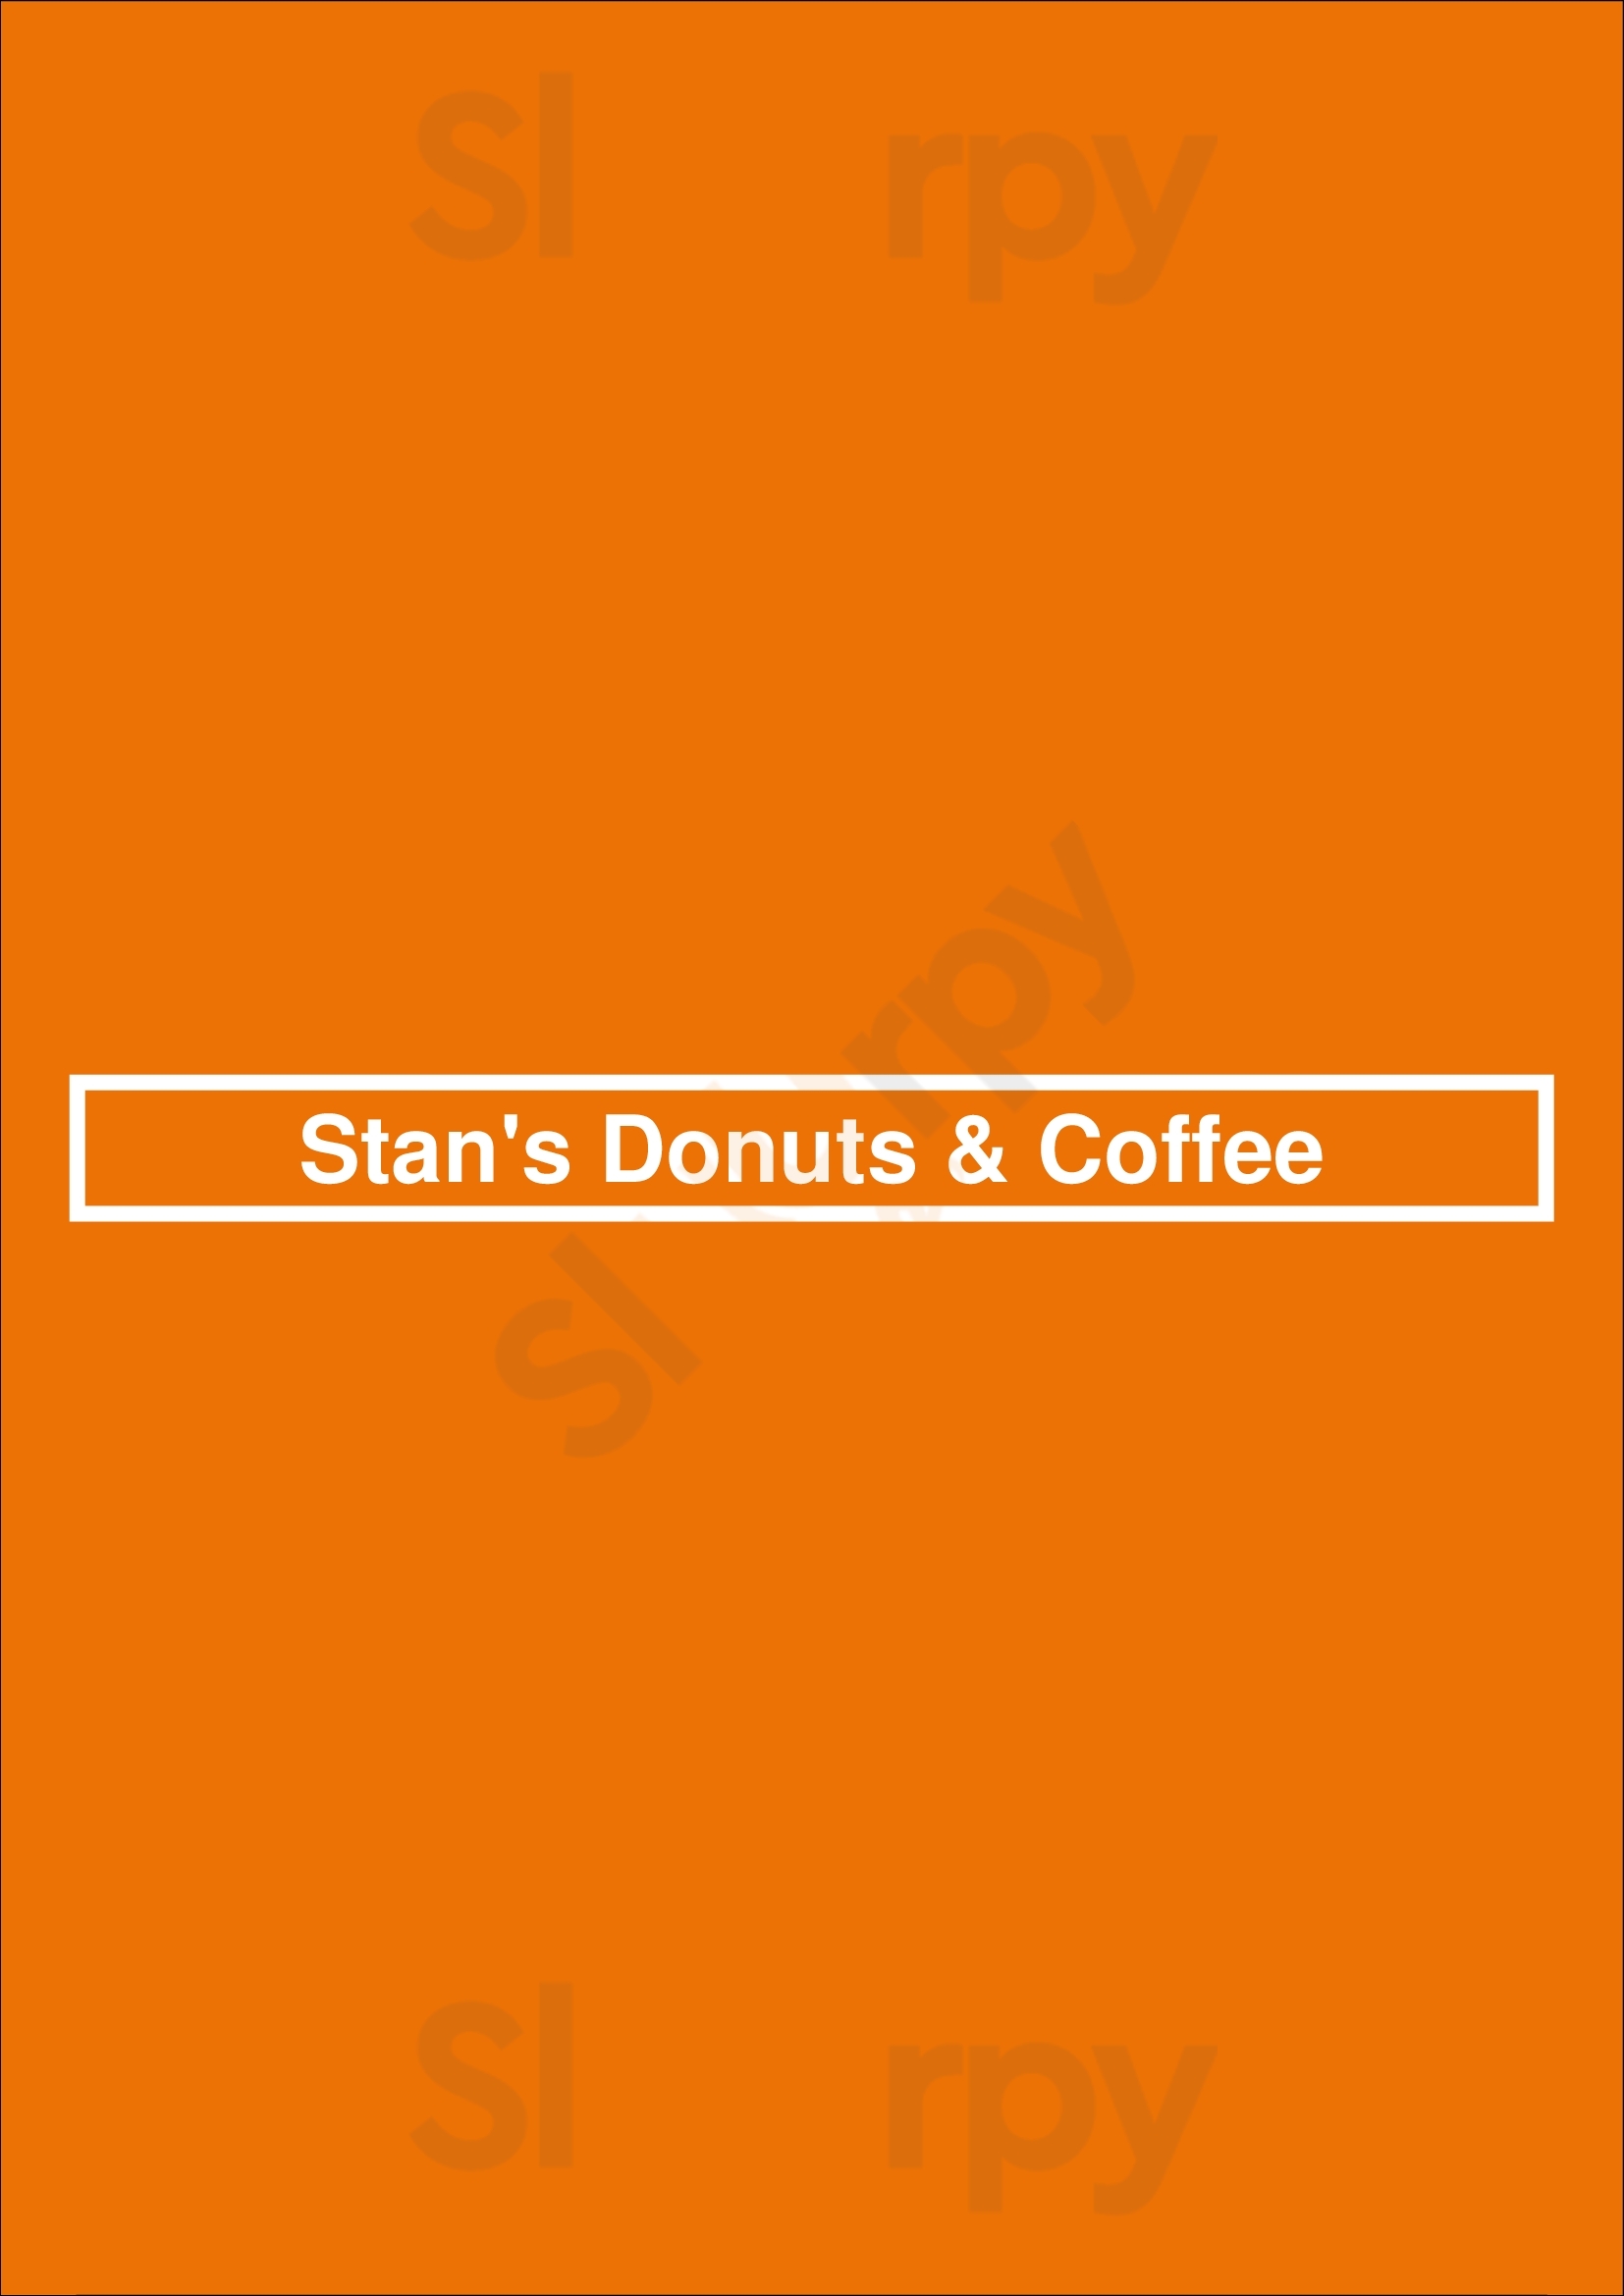 Stan's Donuts & Coffee Chicago Menu - 1